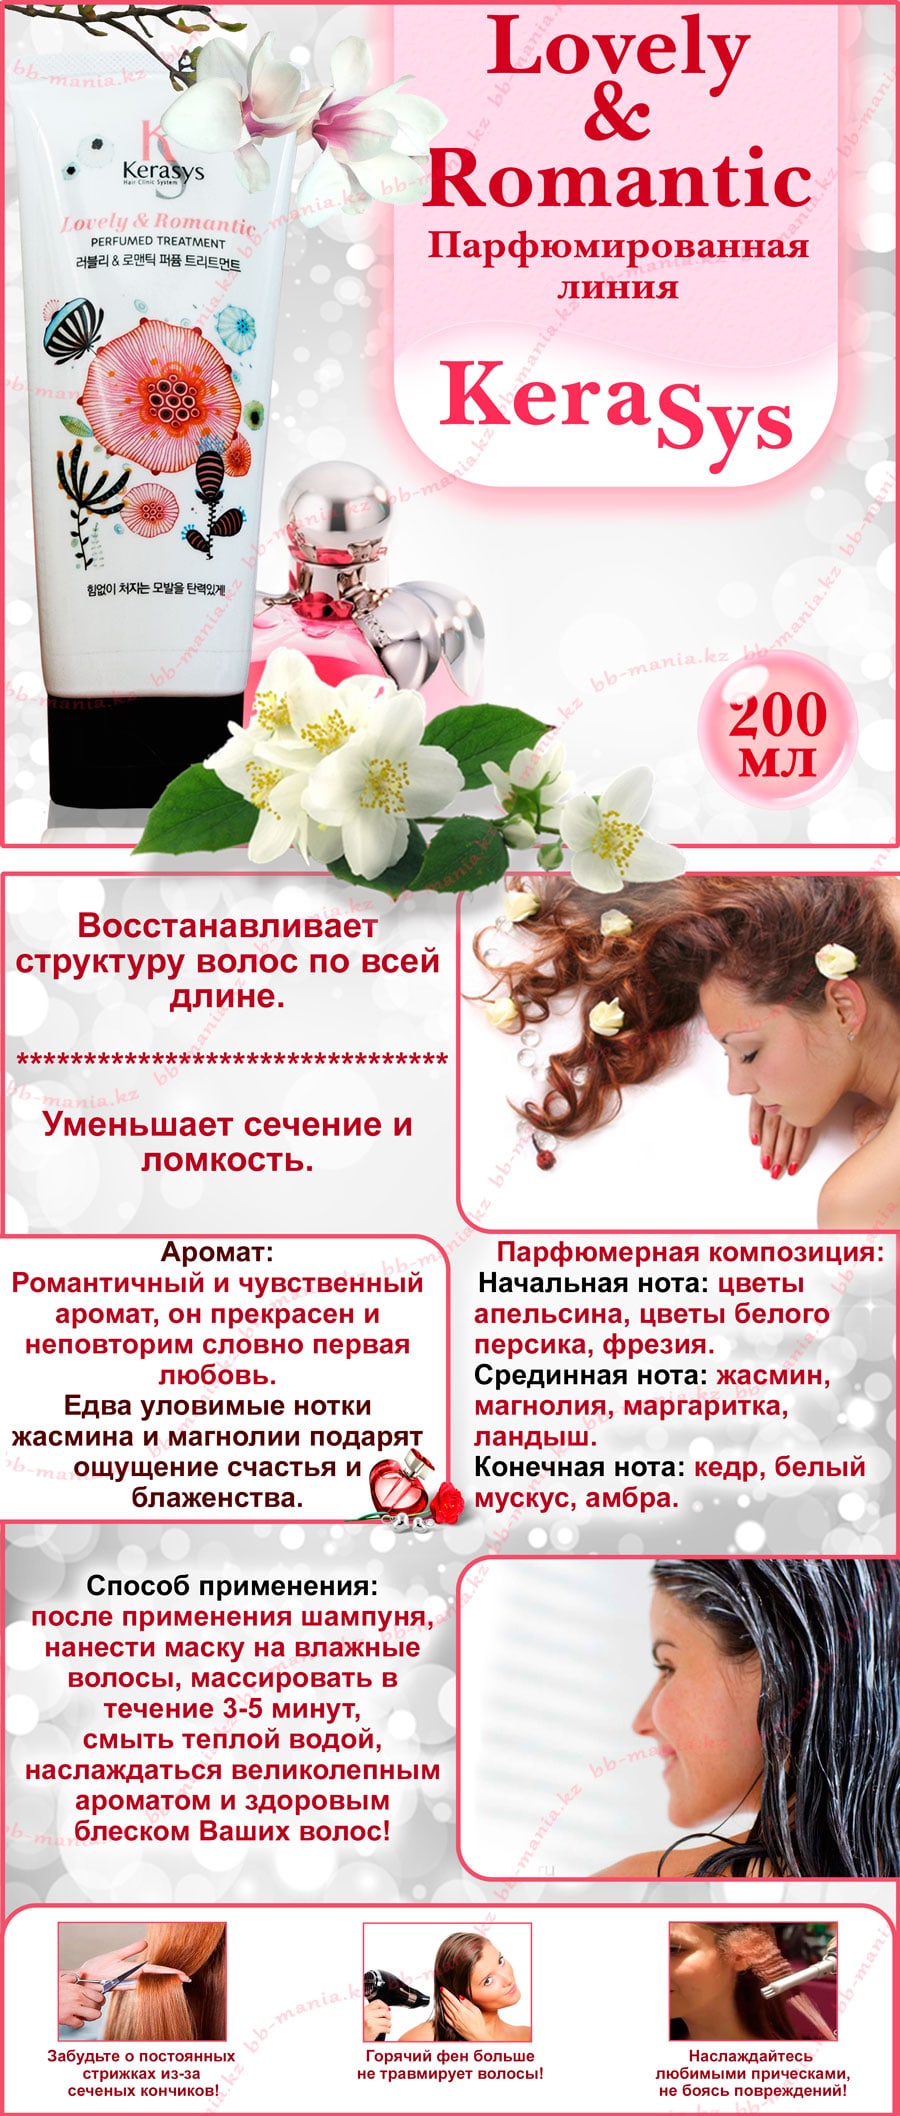 Lovely-&-Romantic-Parfumed-Treatment-[Kerasys]-min